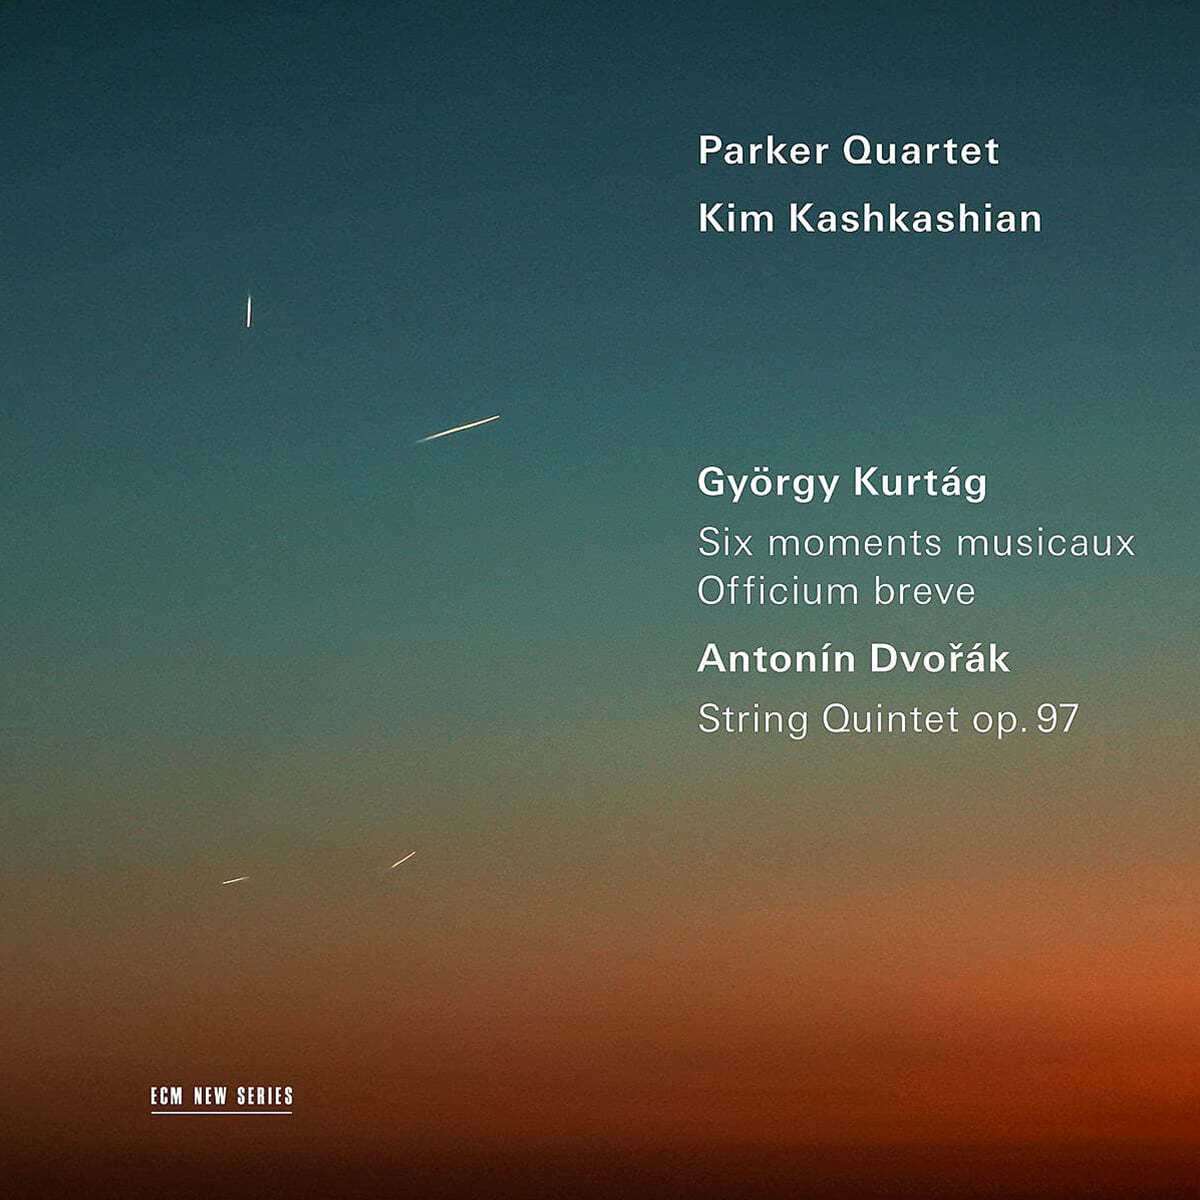 Parker Quartet / Kim Kashkashian 죄르지 쿠르탁: 6개의 악흥의 순간 / 드보르작: 현악 오중주 3번 외 (Gyorgy Kurtag: Six Moments musicaux Op.44 / Dvorak: String Quintet Op.97) 